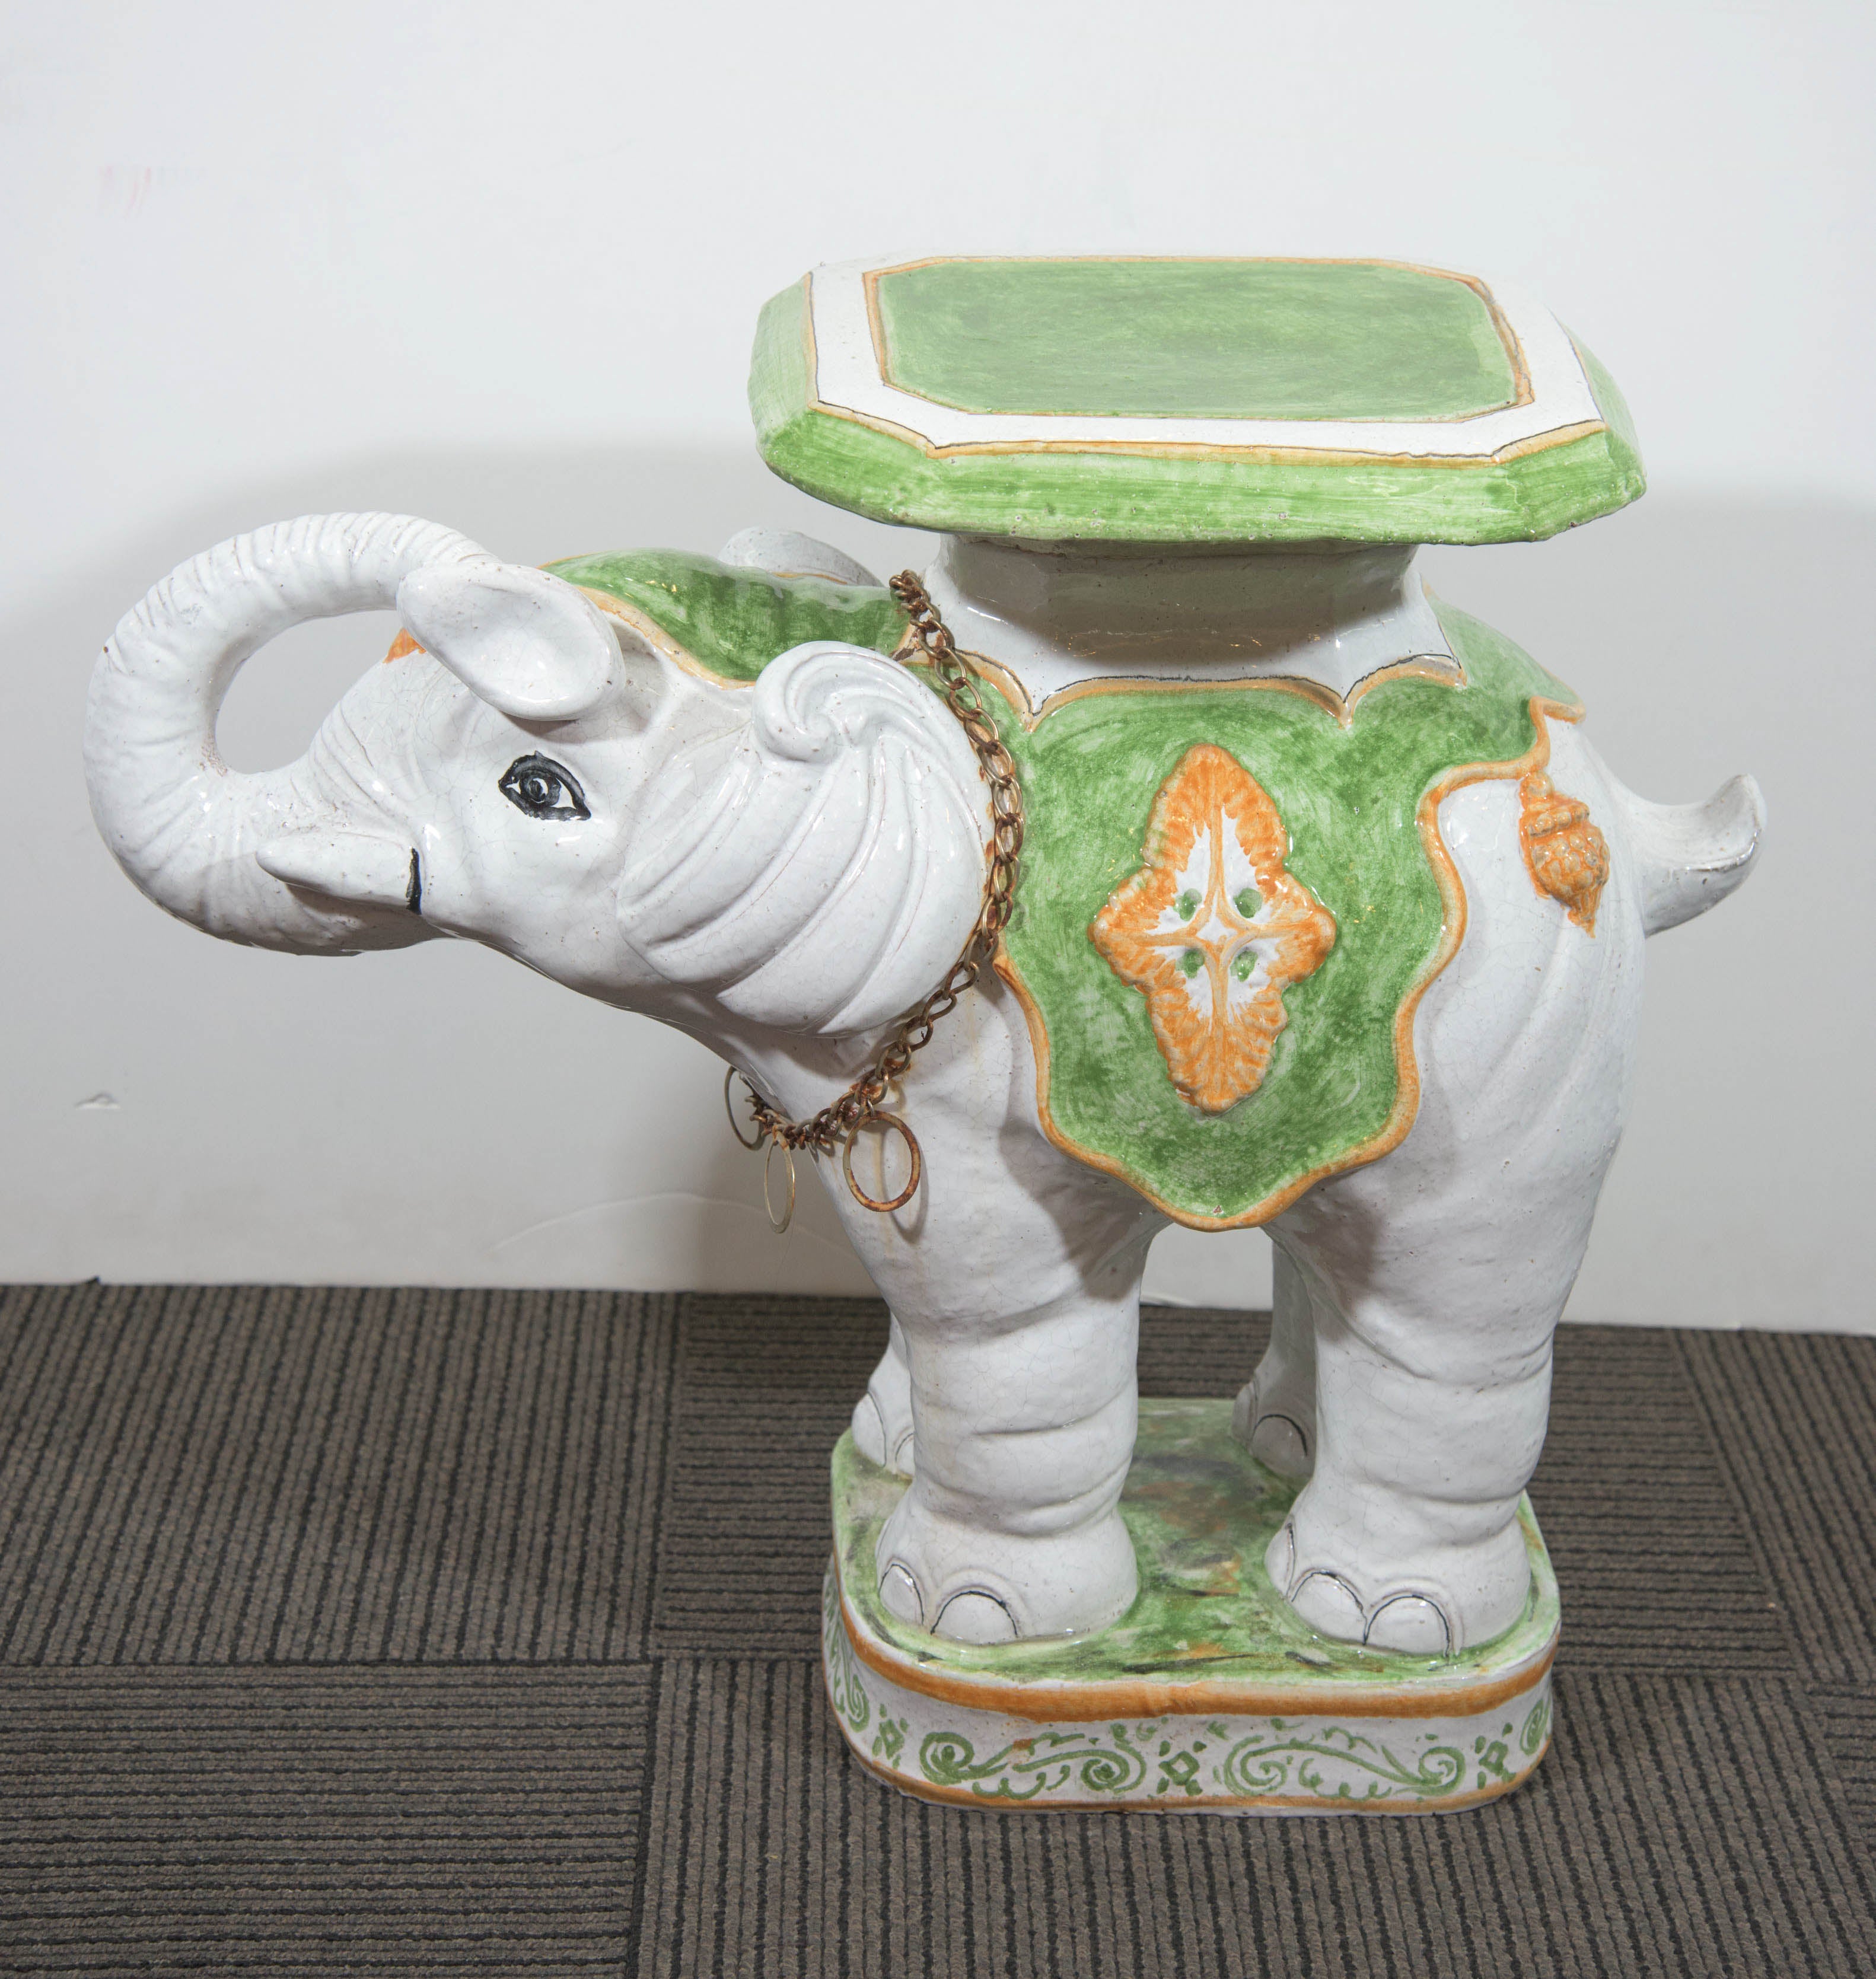 Mid-Century Hand-Painted Ceramic Elephant Garden Seat